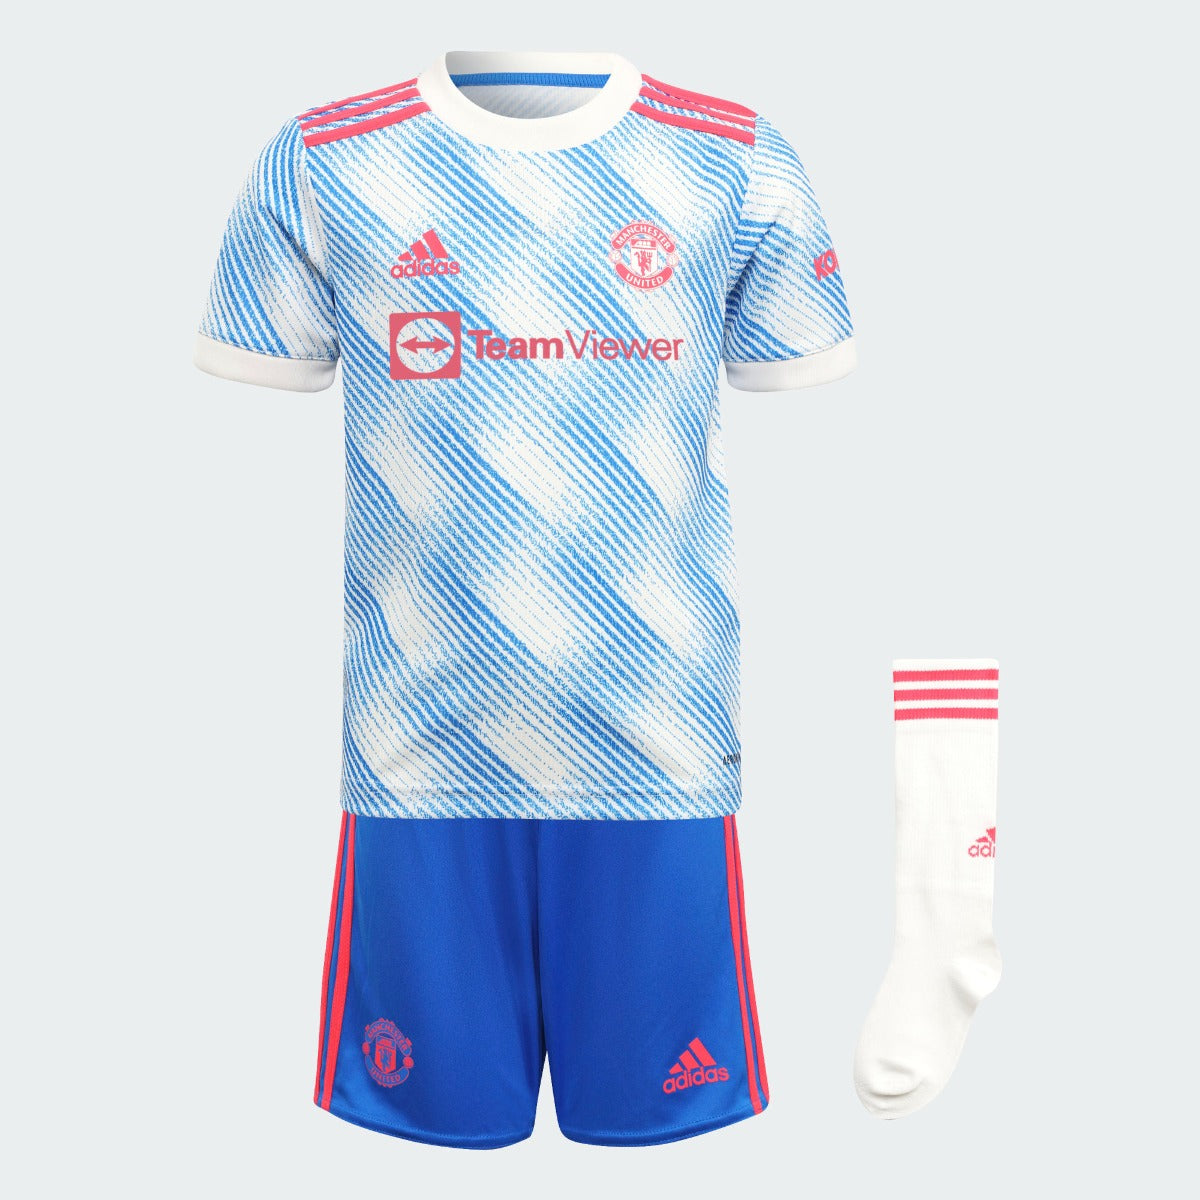 Adidas 2021-22 Manchester United Away MINI Kit - White-Glow Blue (Set)